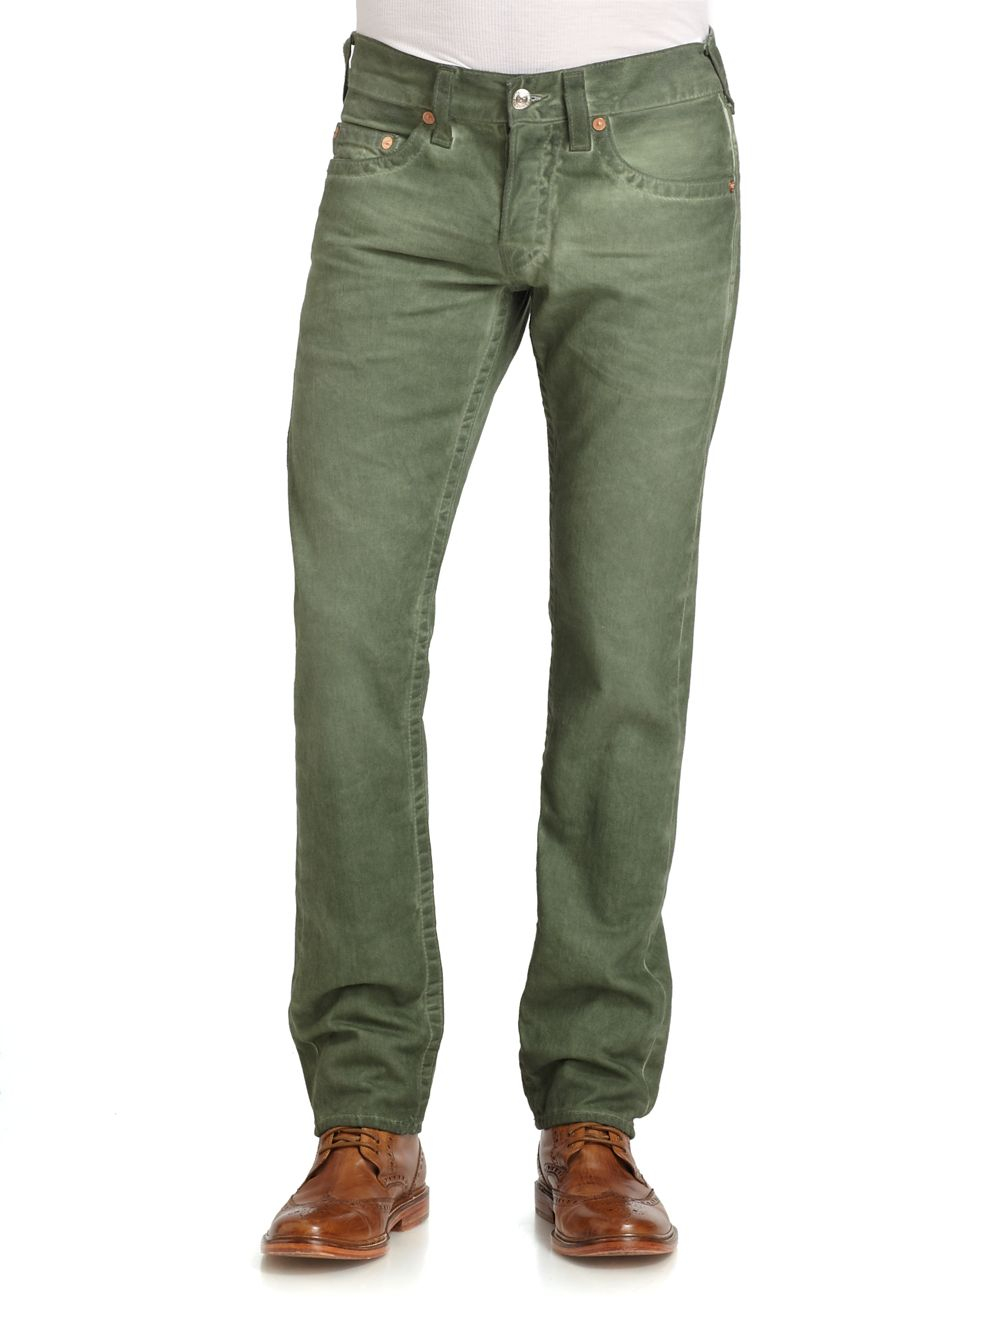 Lyst - True Religion Coldpressed Cotton Denim Jeans in Green for Men